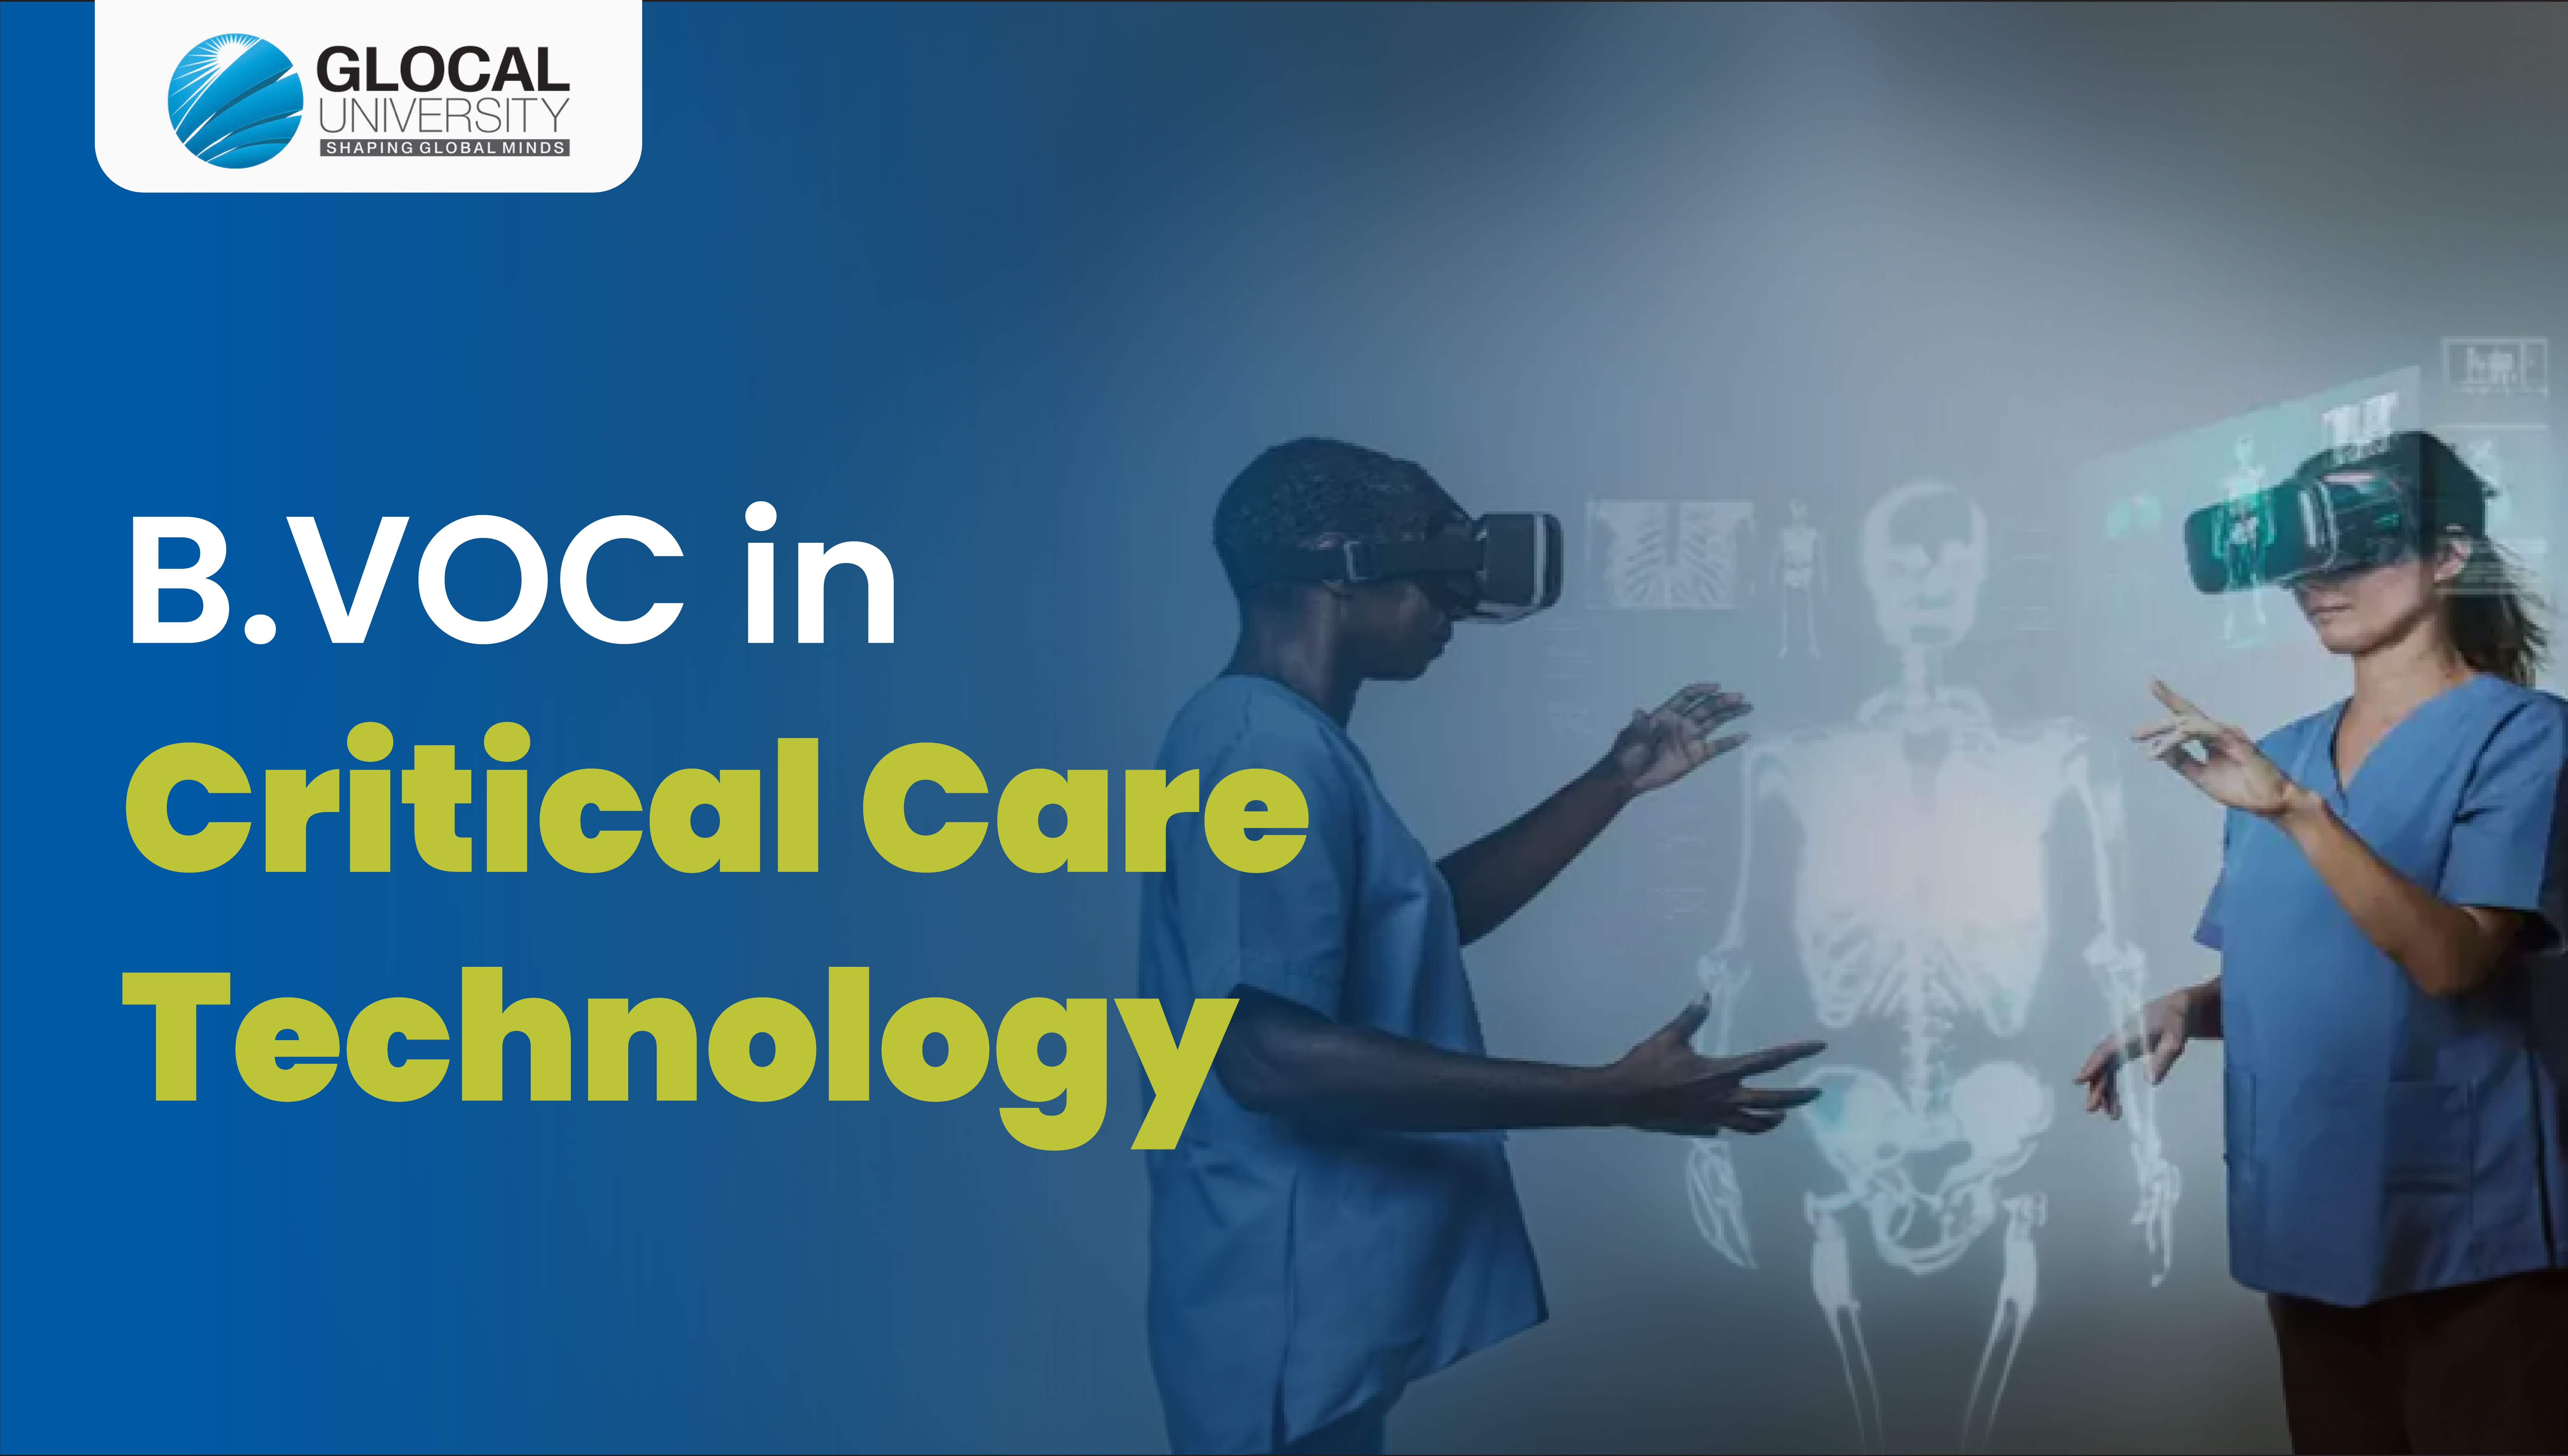 Critical Care Technology